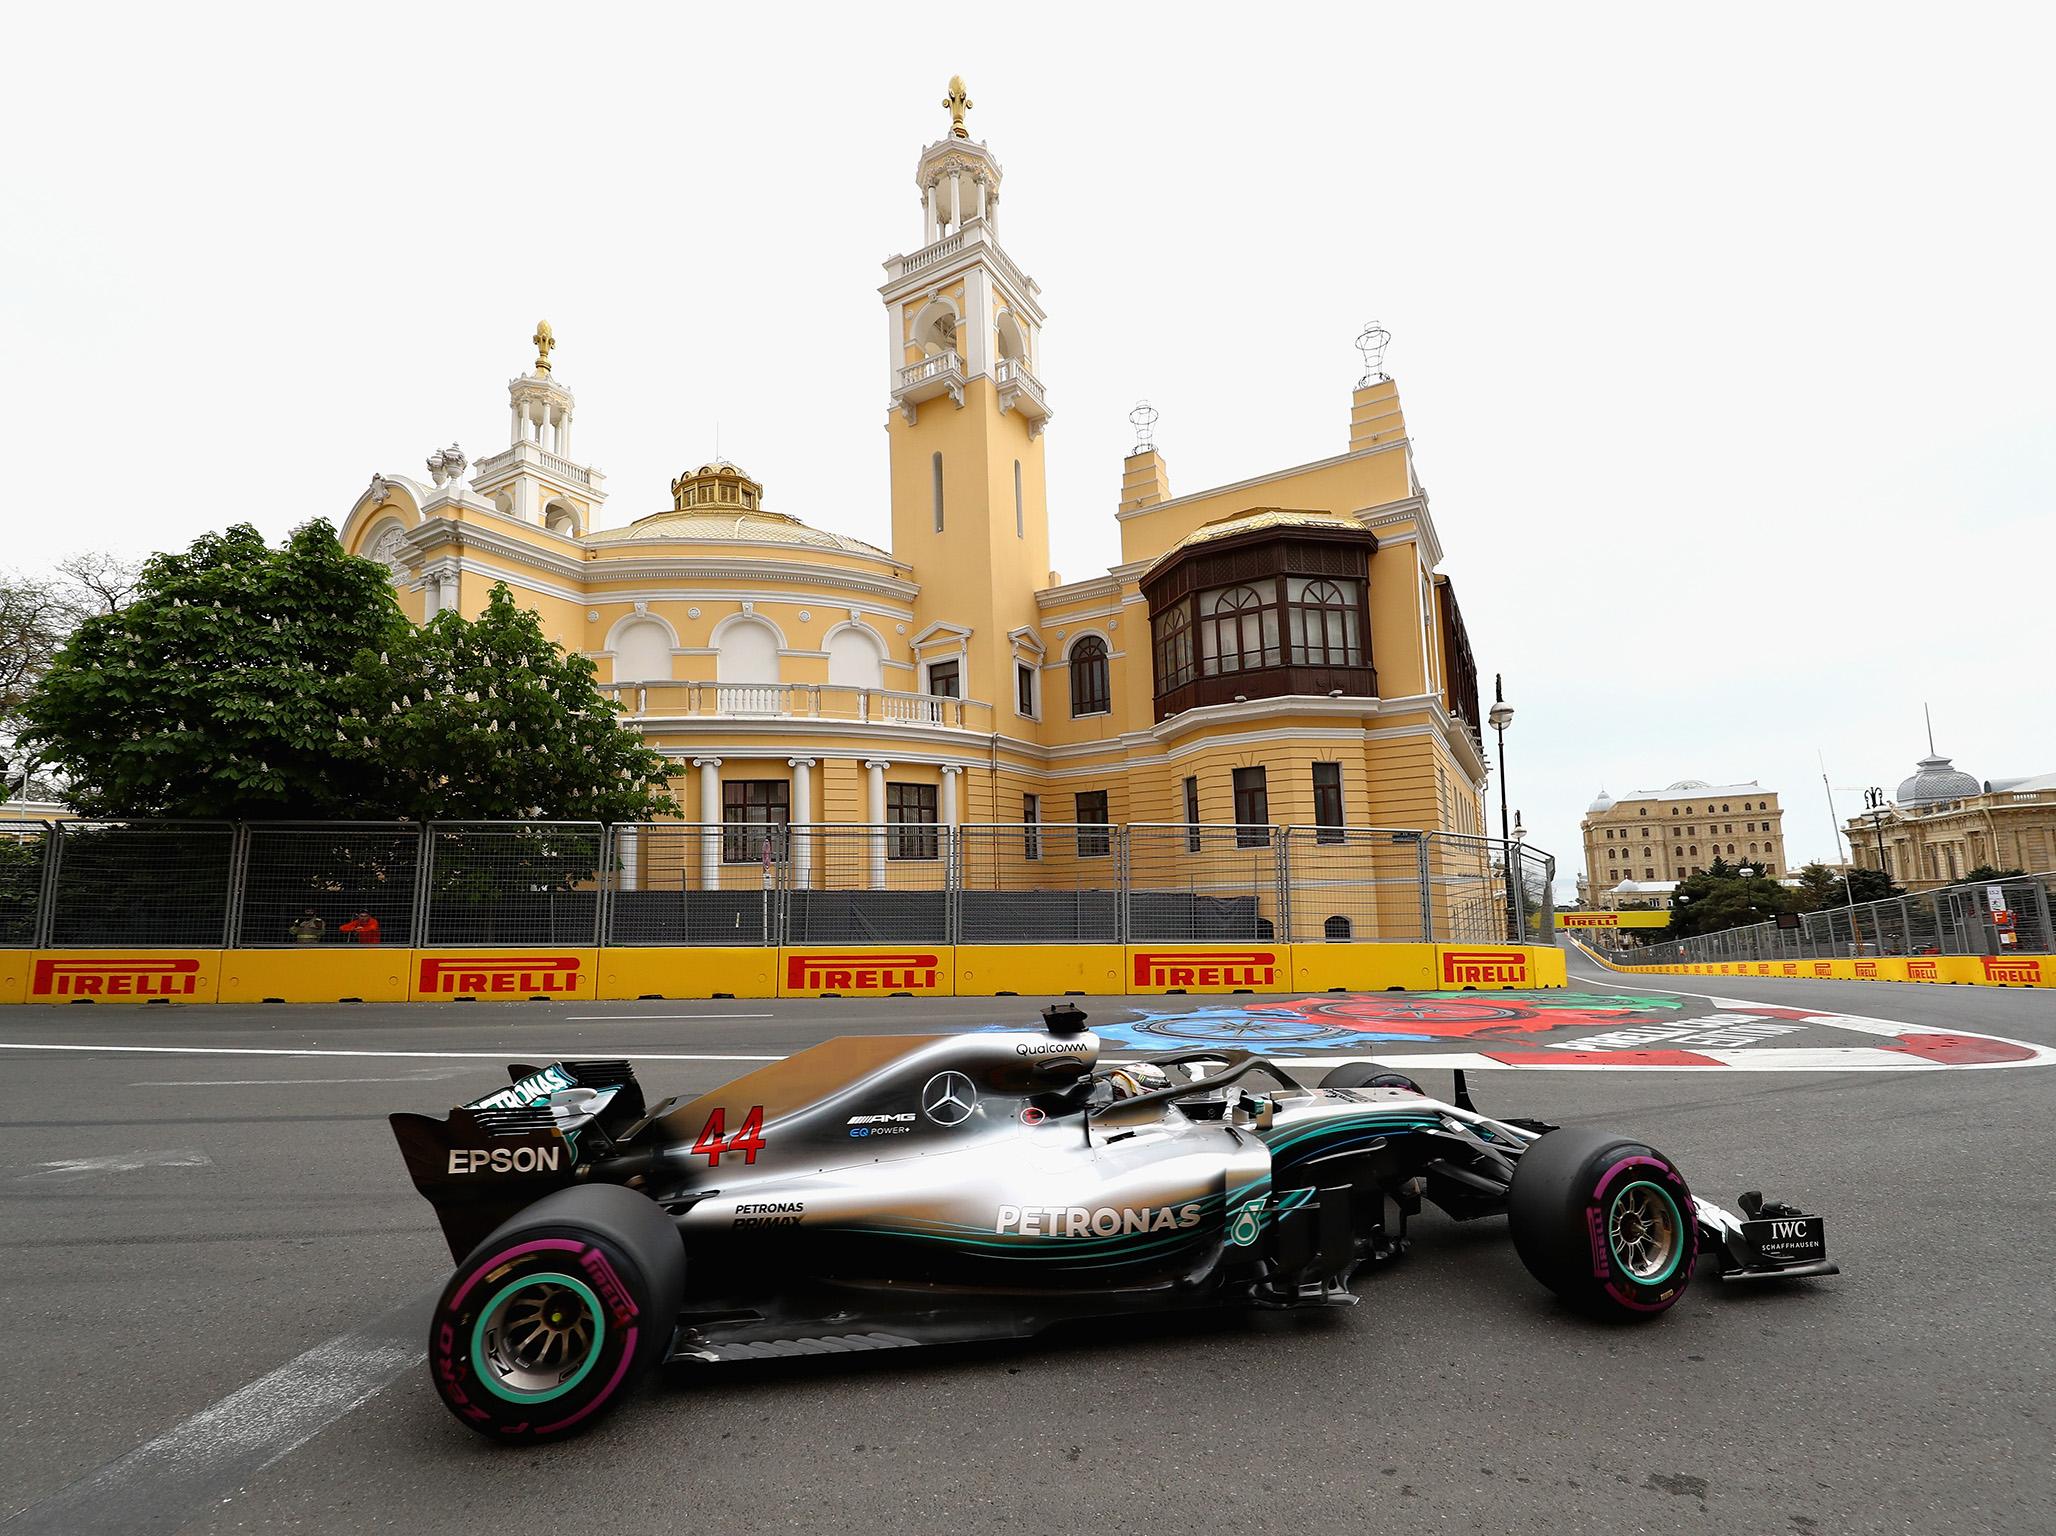 Lewis Hamilton during practice for the Azerbaijan Grand Prix